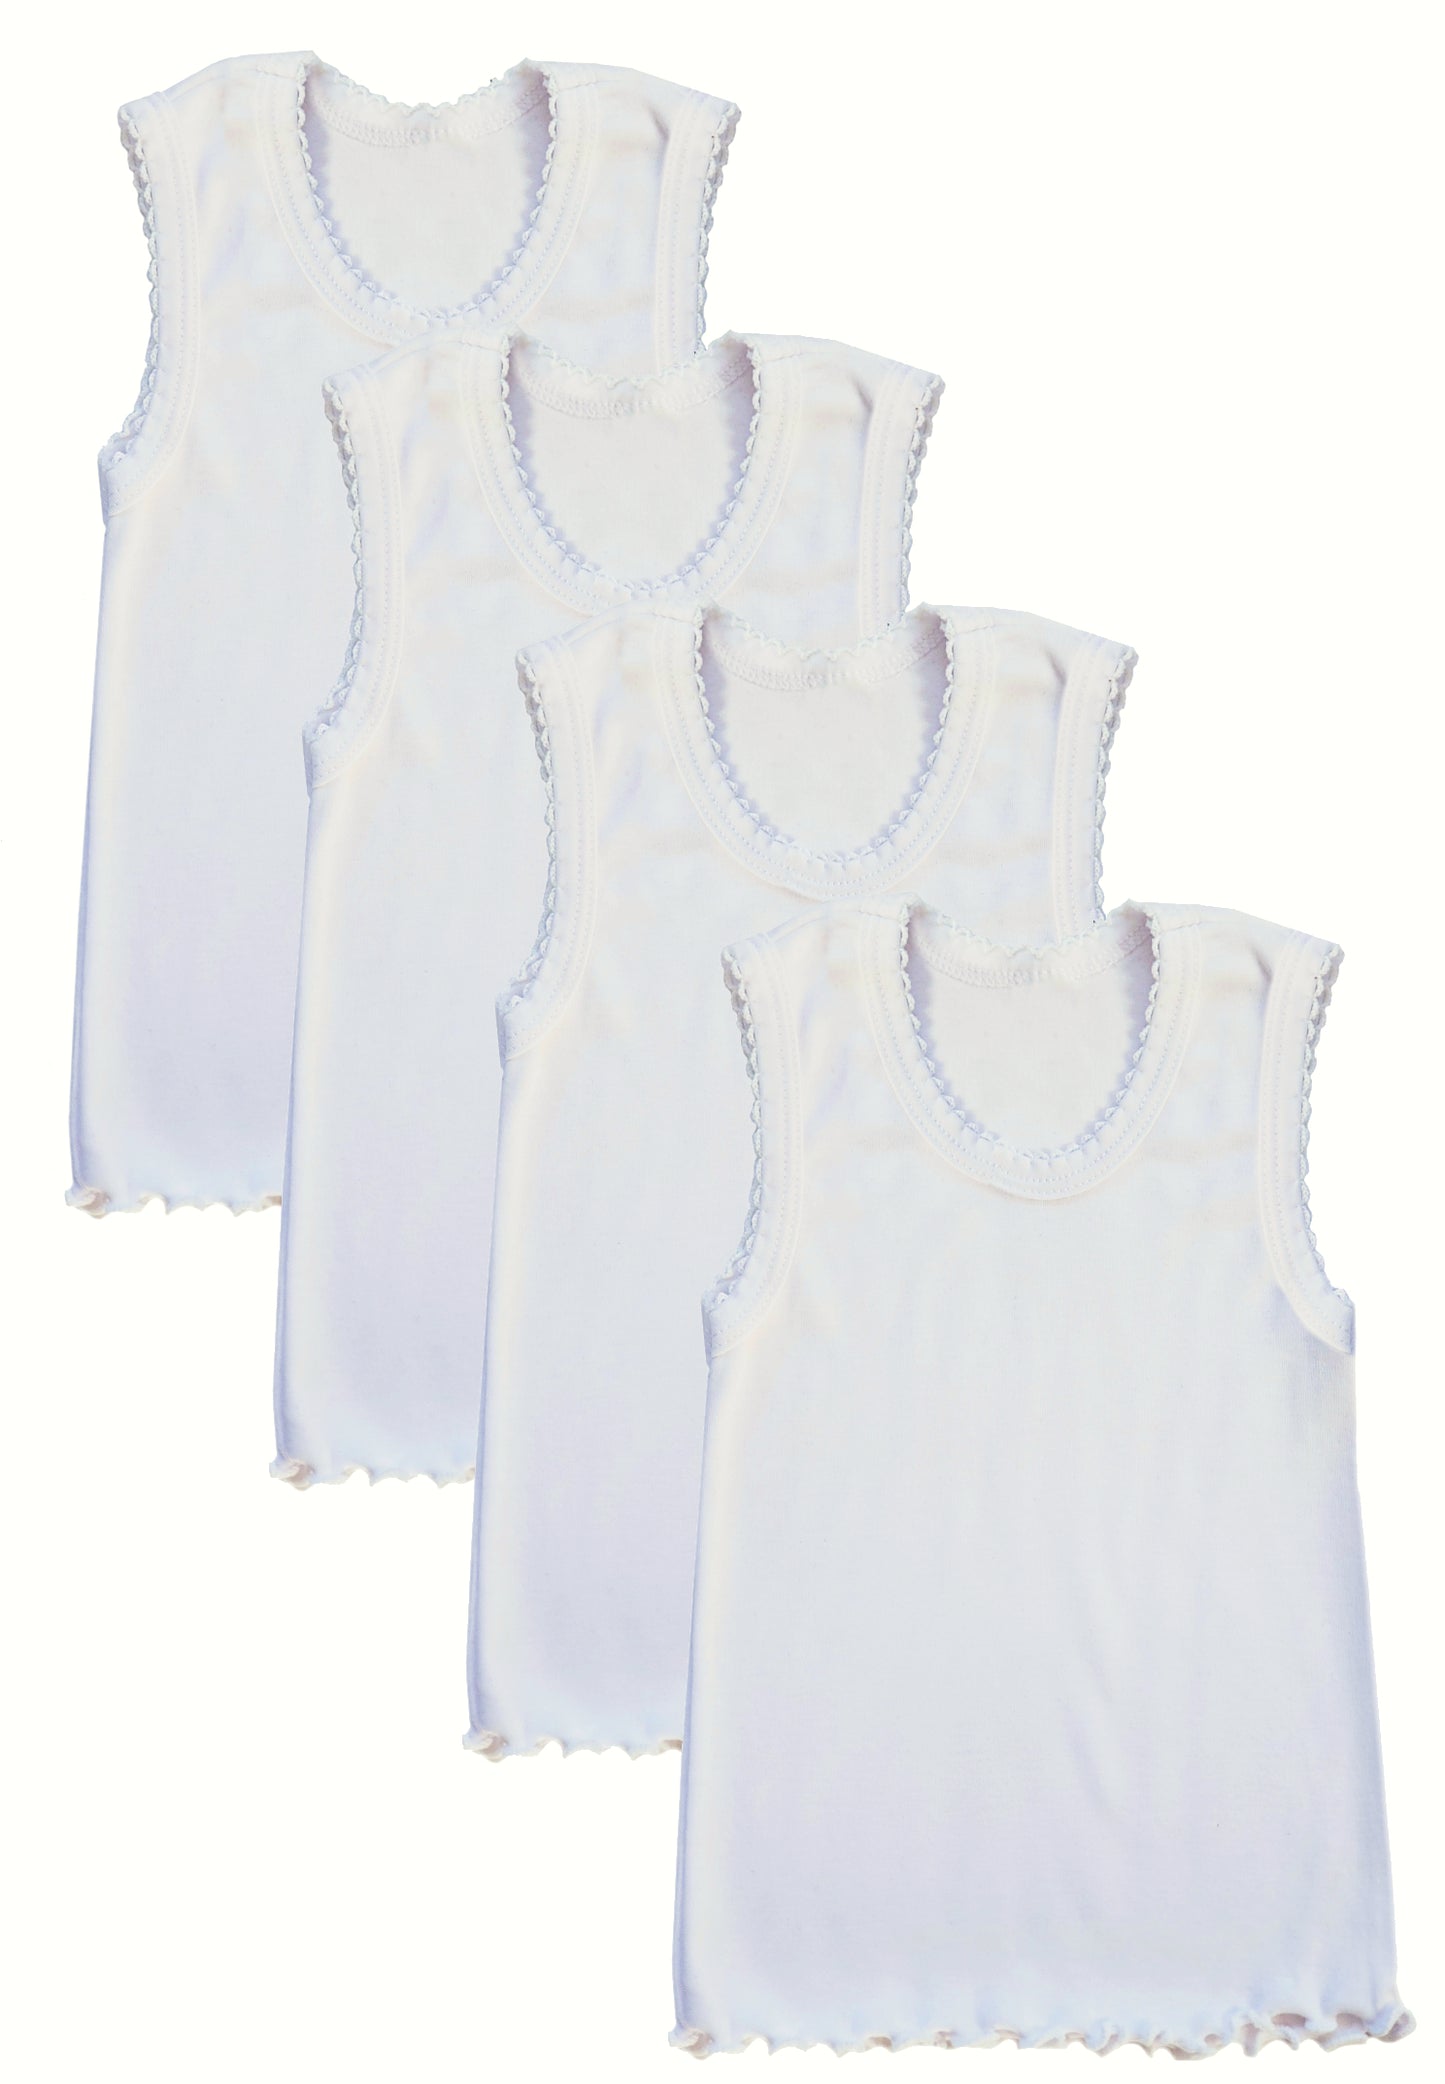 Girls Undershirt Cotton Tank Top Sleeveless 100% Cotton-KC 4401-4404